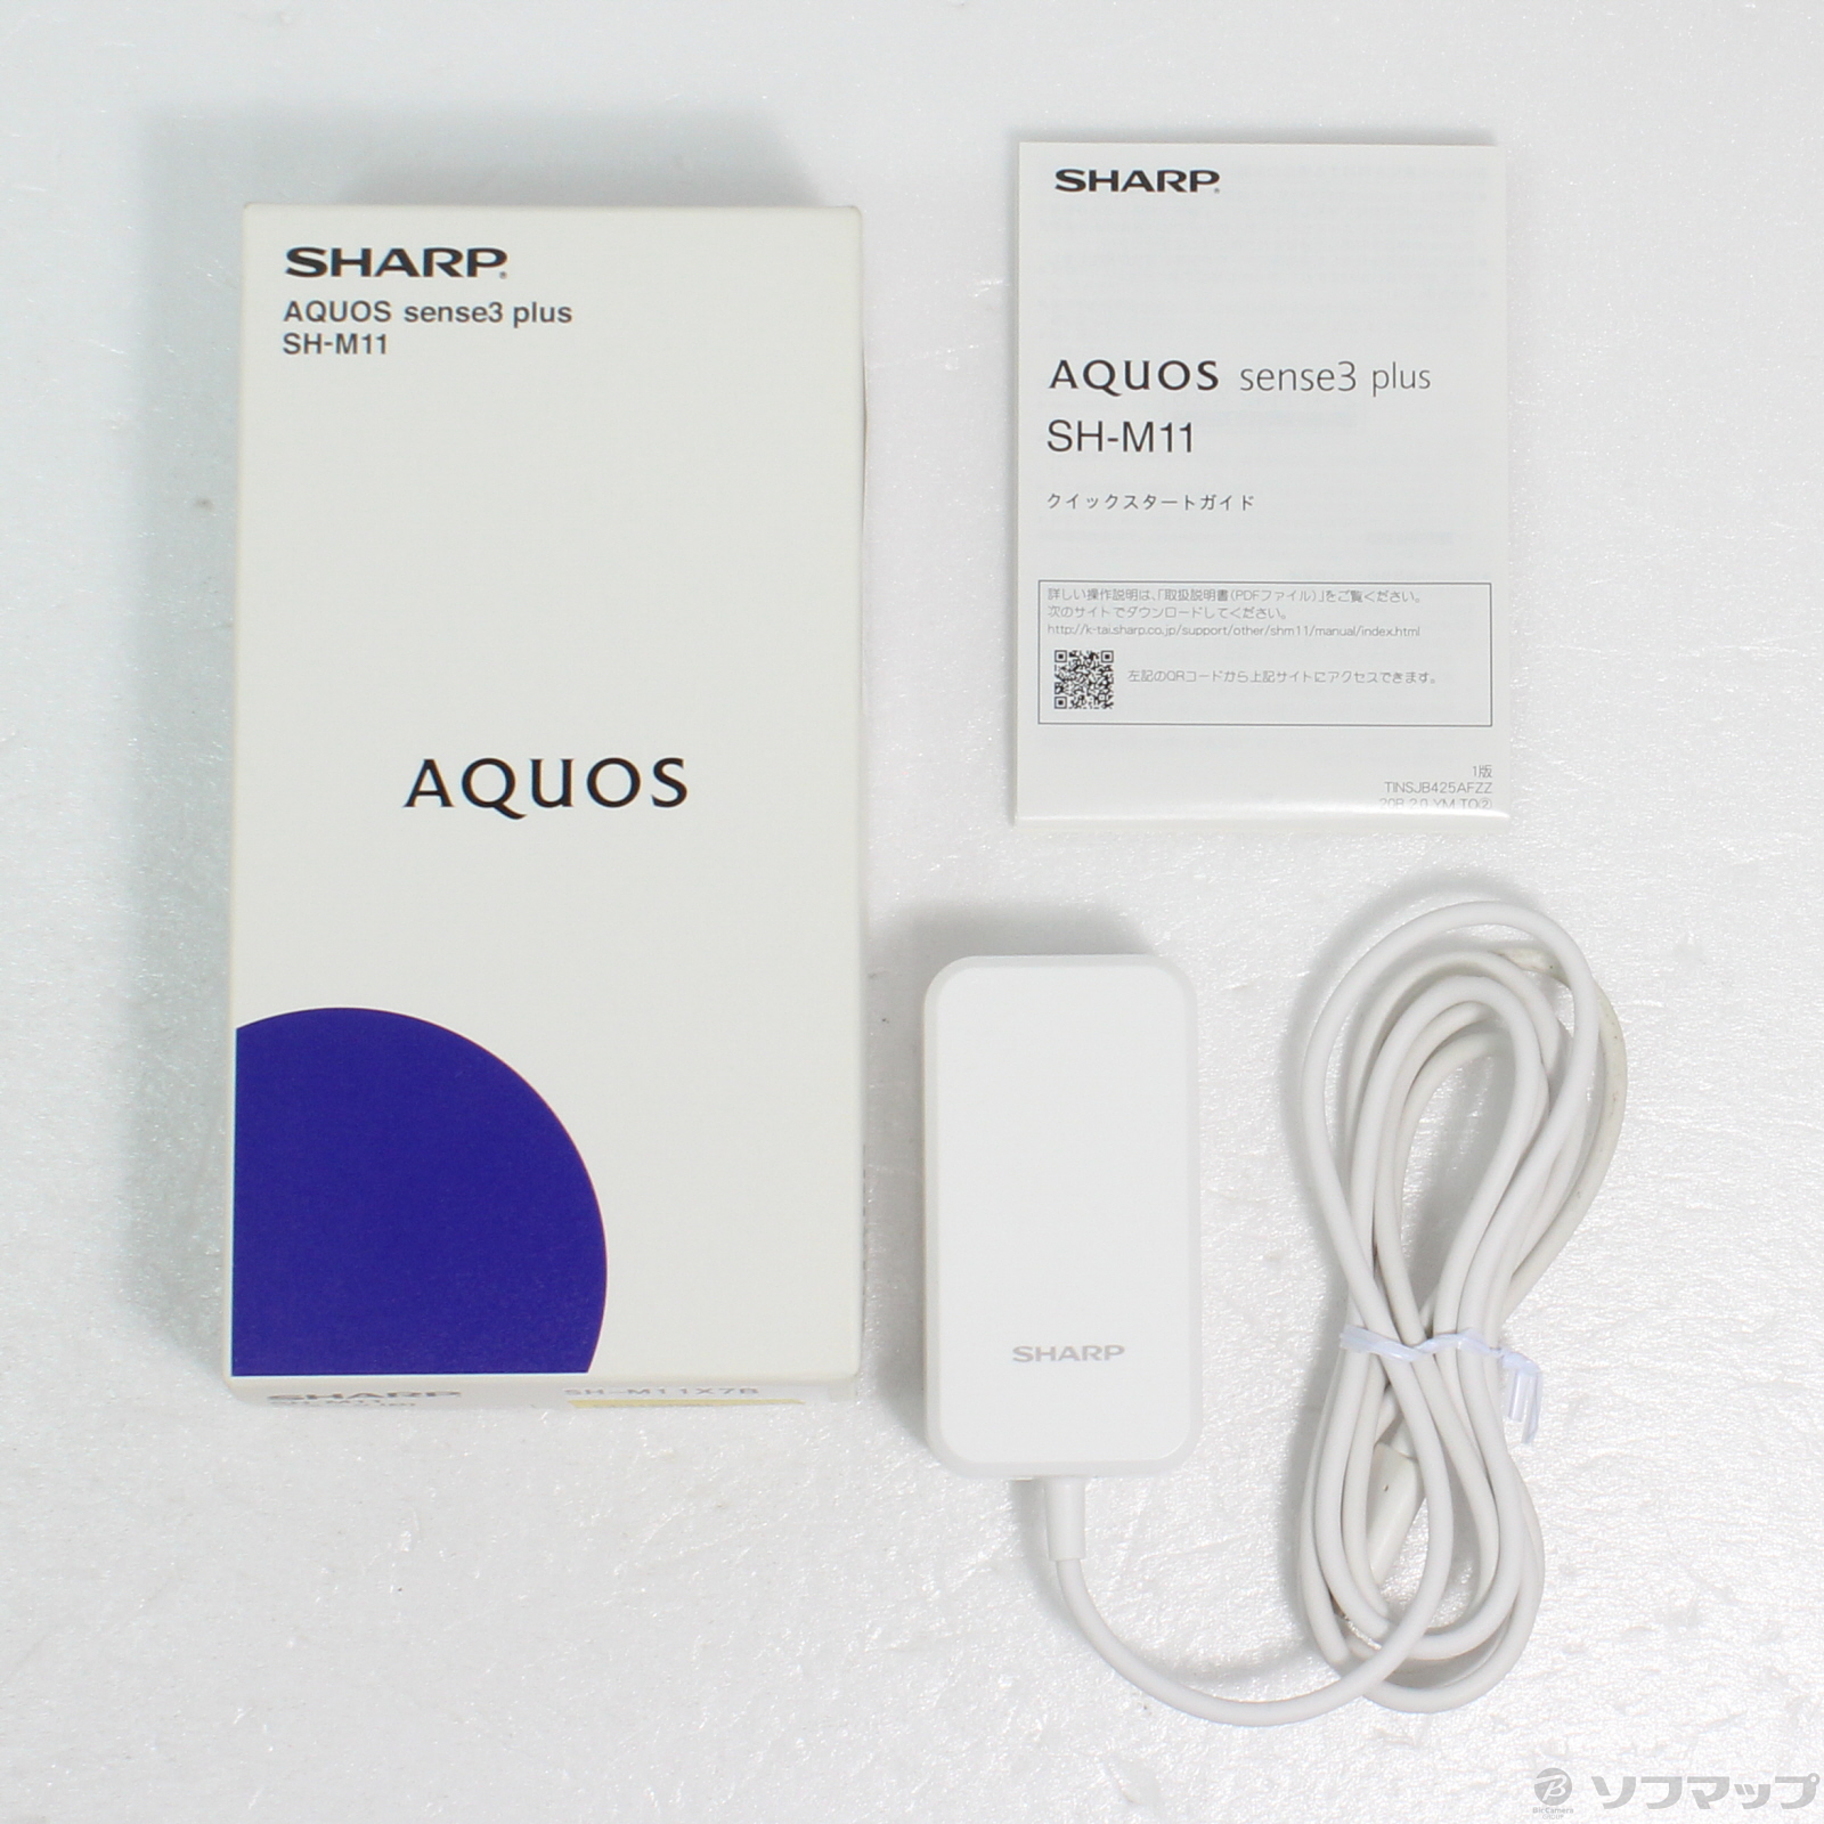 AQUOS sense3 plus SH-RM11 
ブラック 黒
新品未開封